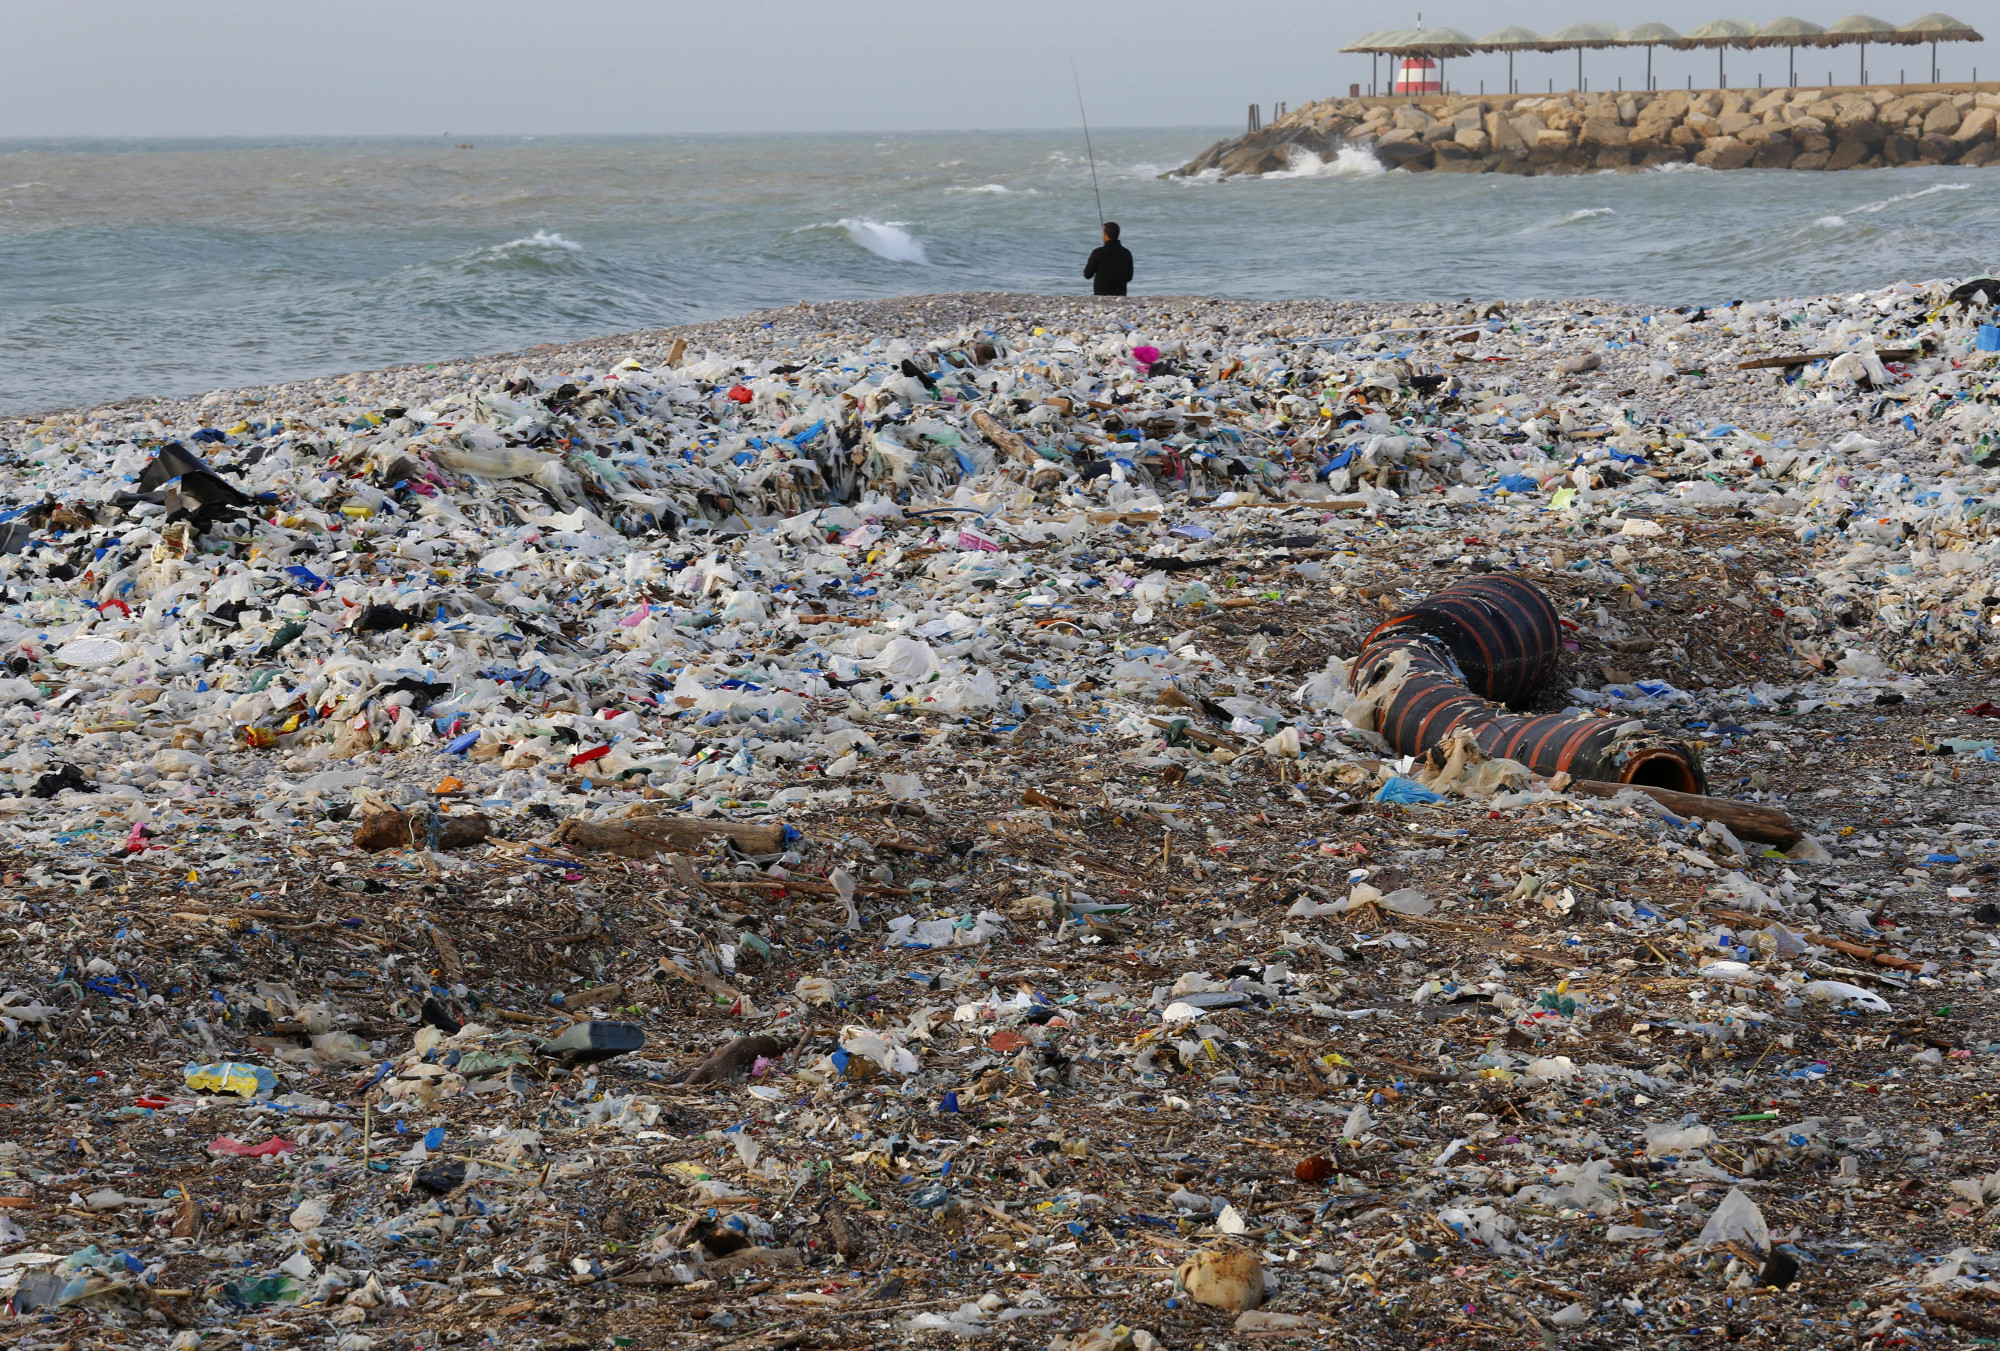 The Lebanon municipal solid waste crisis